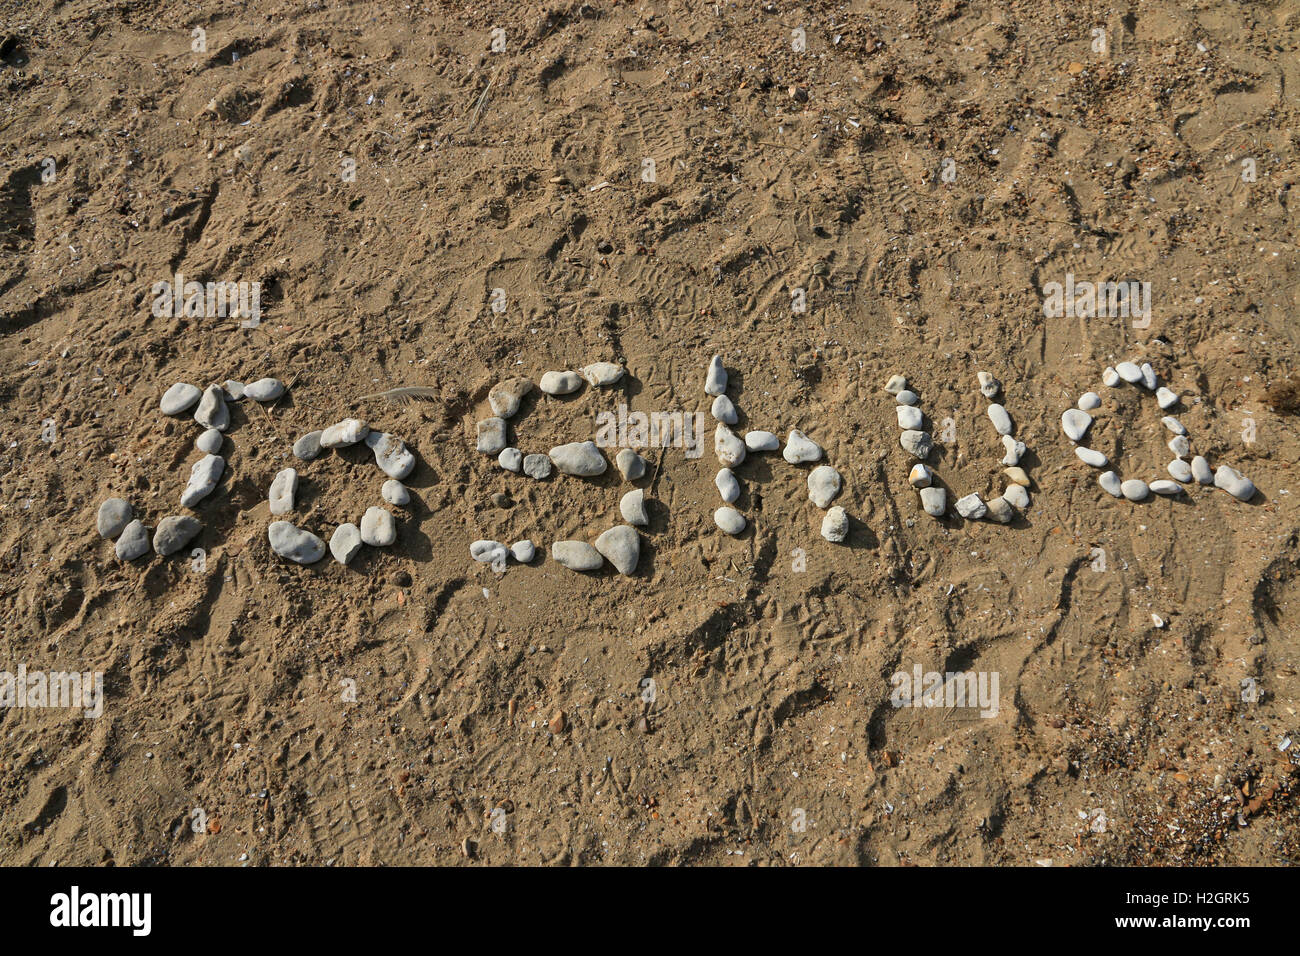 Name, Joshua, written in pebbles on a sandy beach Stock Photo